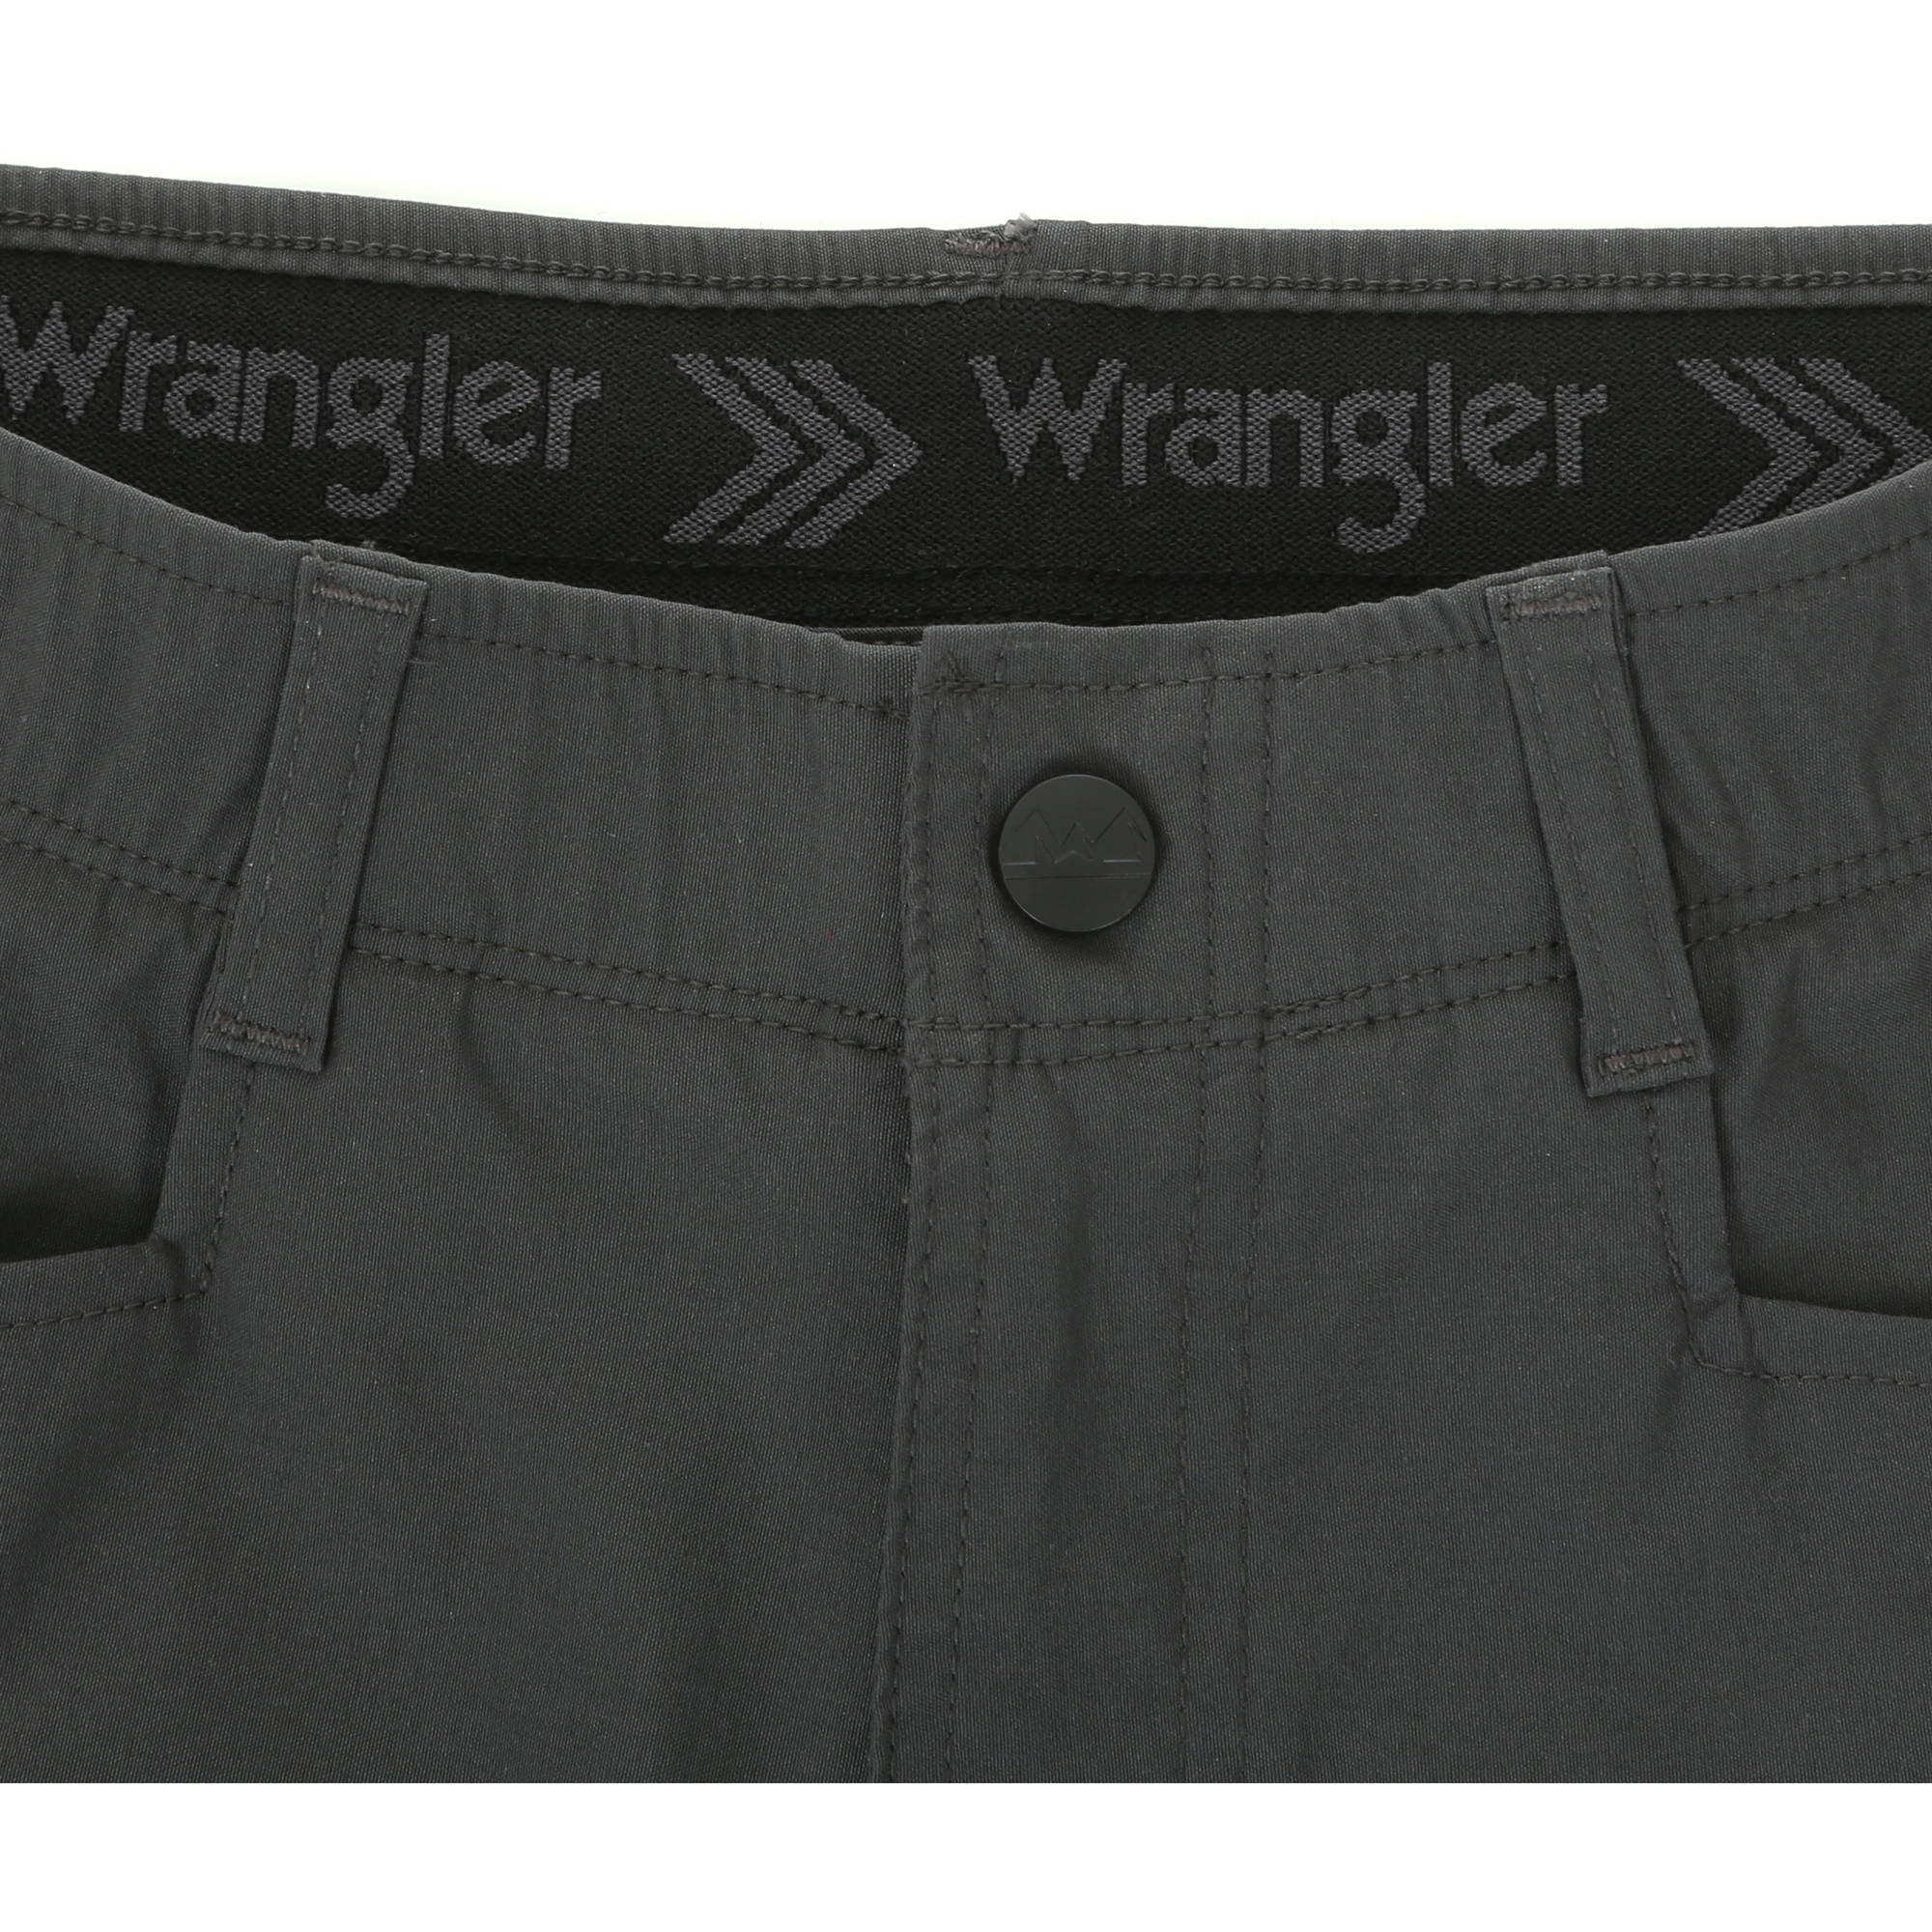 wrangler performance shorts 4 way flex